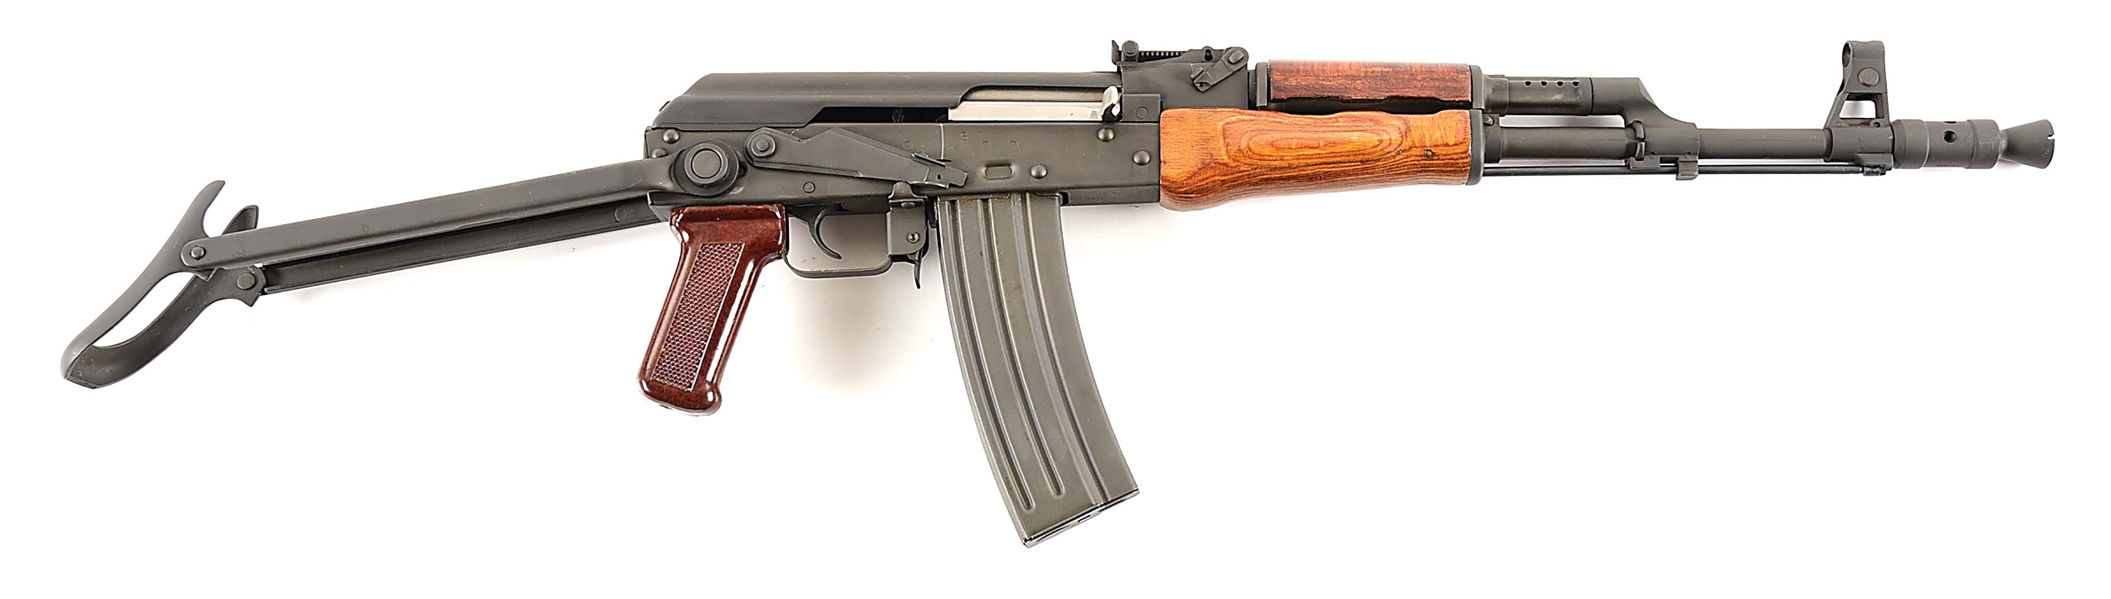 (N) NEAR MINT SWD REGISTERED RECEIVER POLY TECH AKS /AK-47 MACHINE GUN WITH UNDERFOLDING STOCK (FULLY TRANSFERABLE).